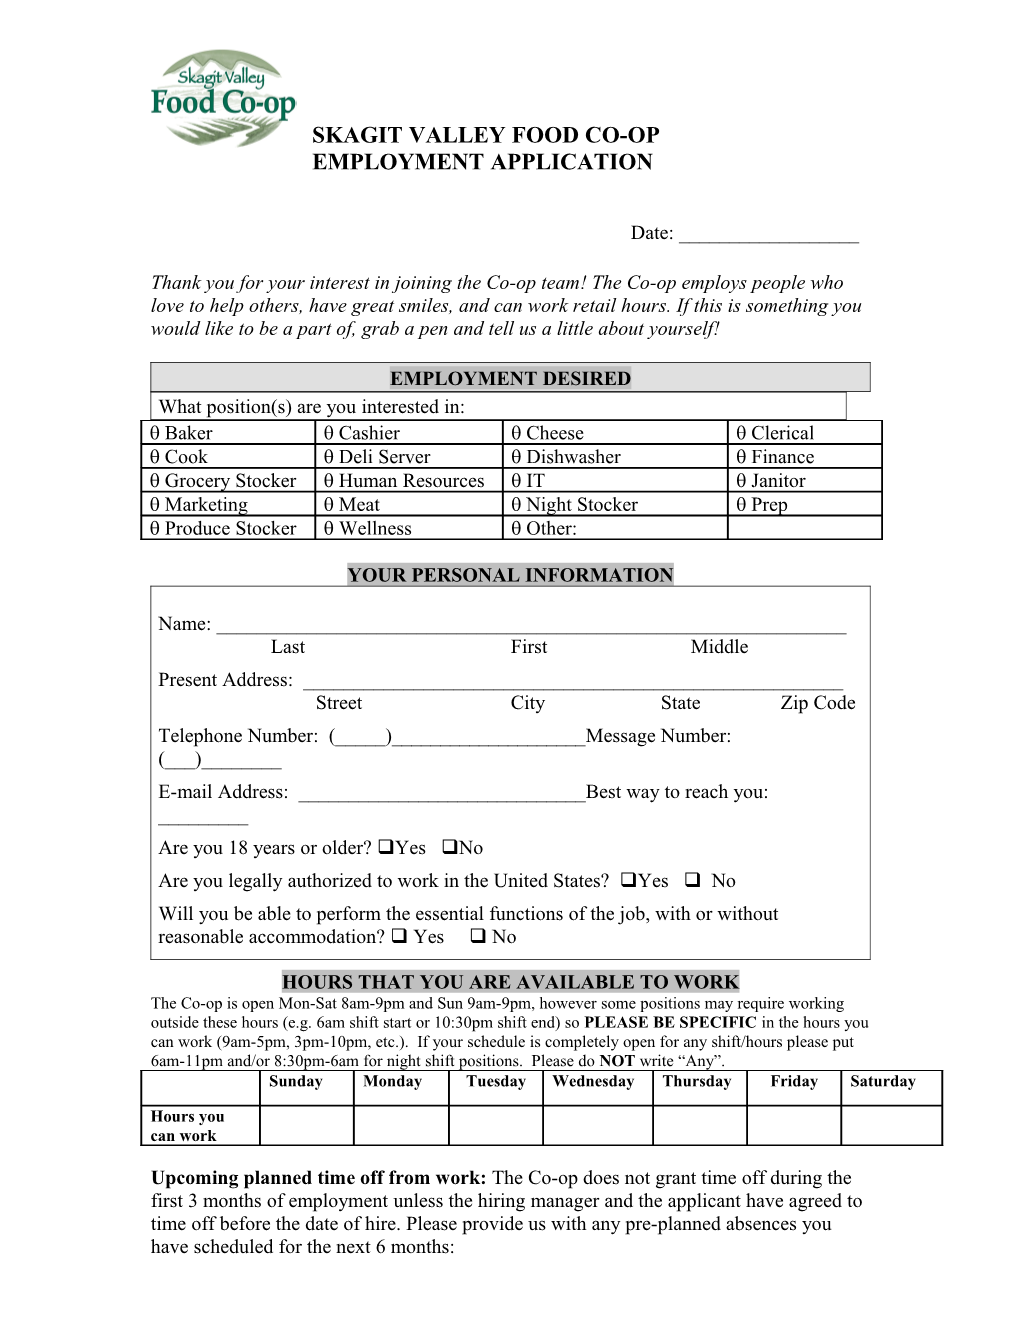 Employment Application s6